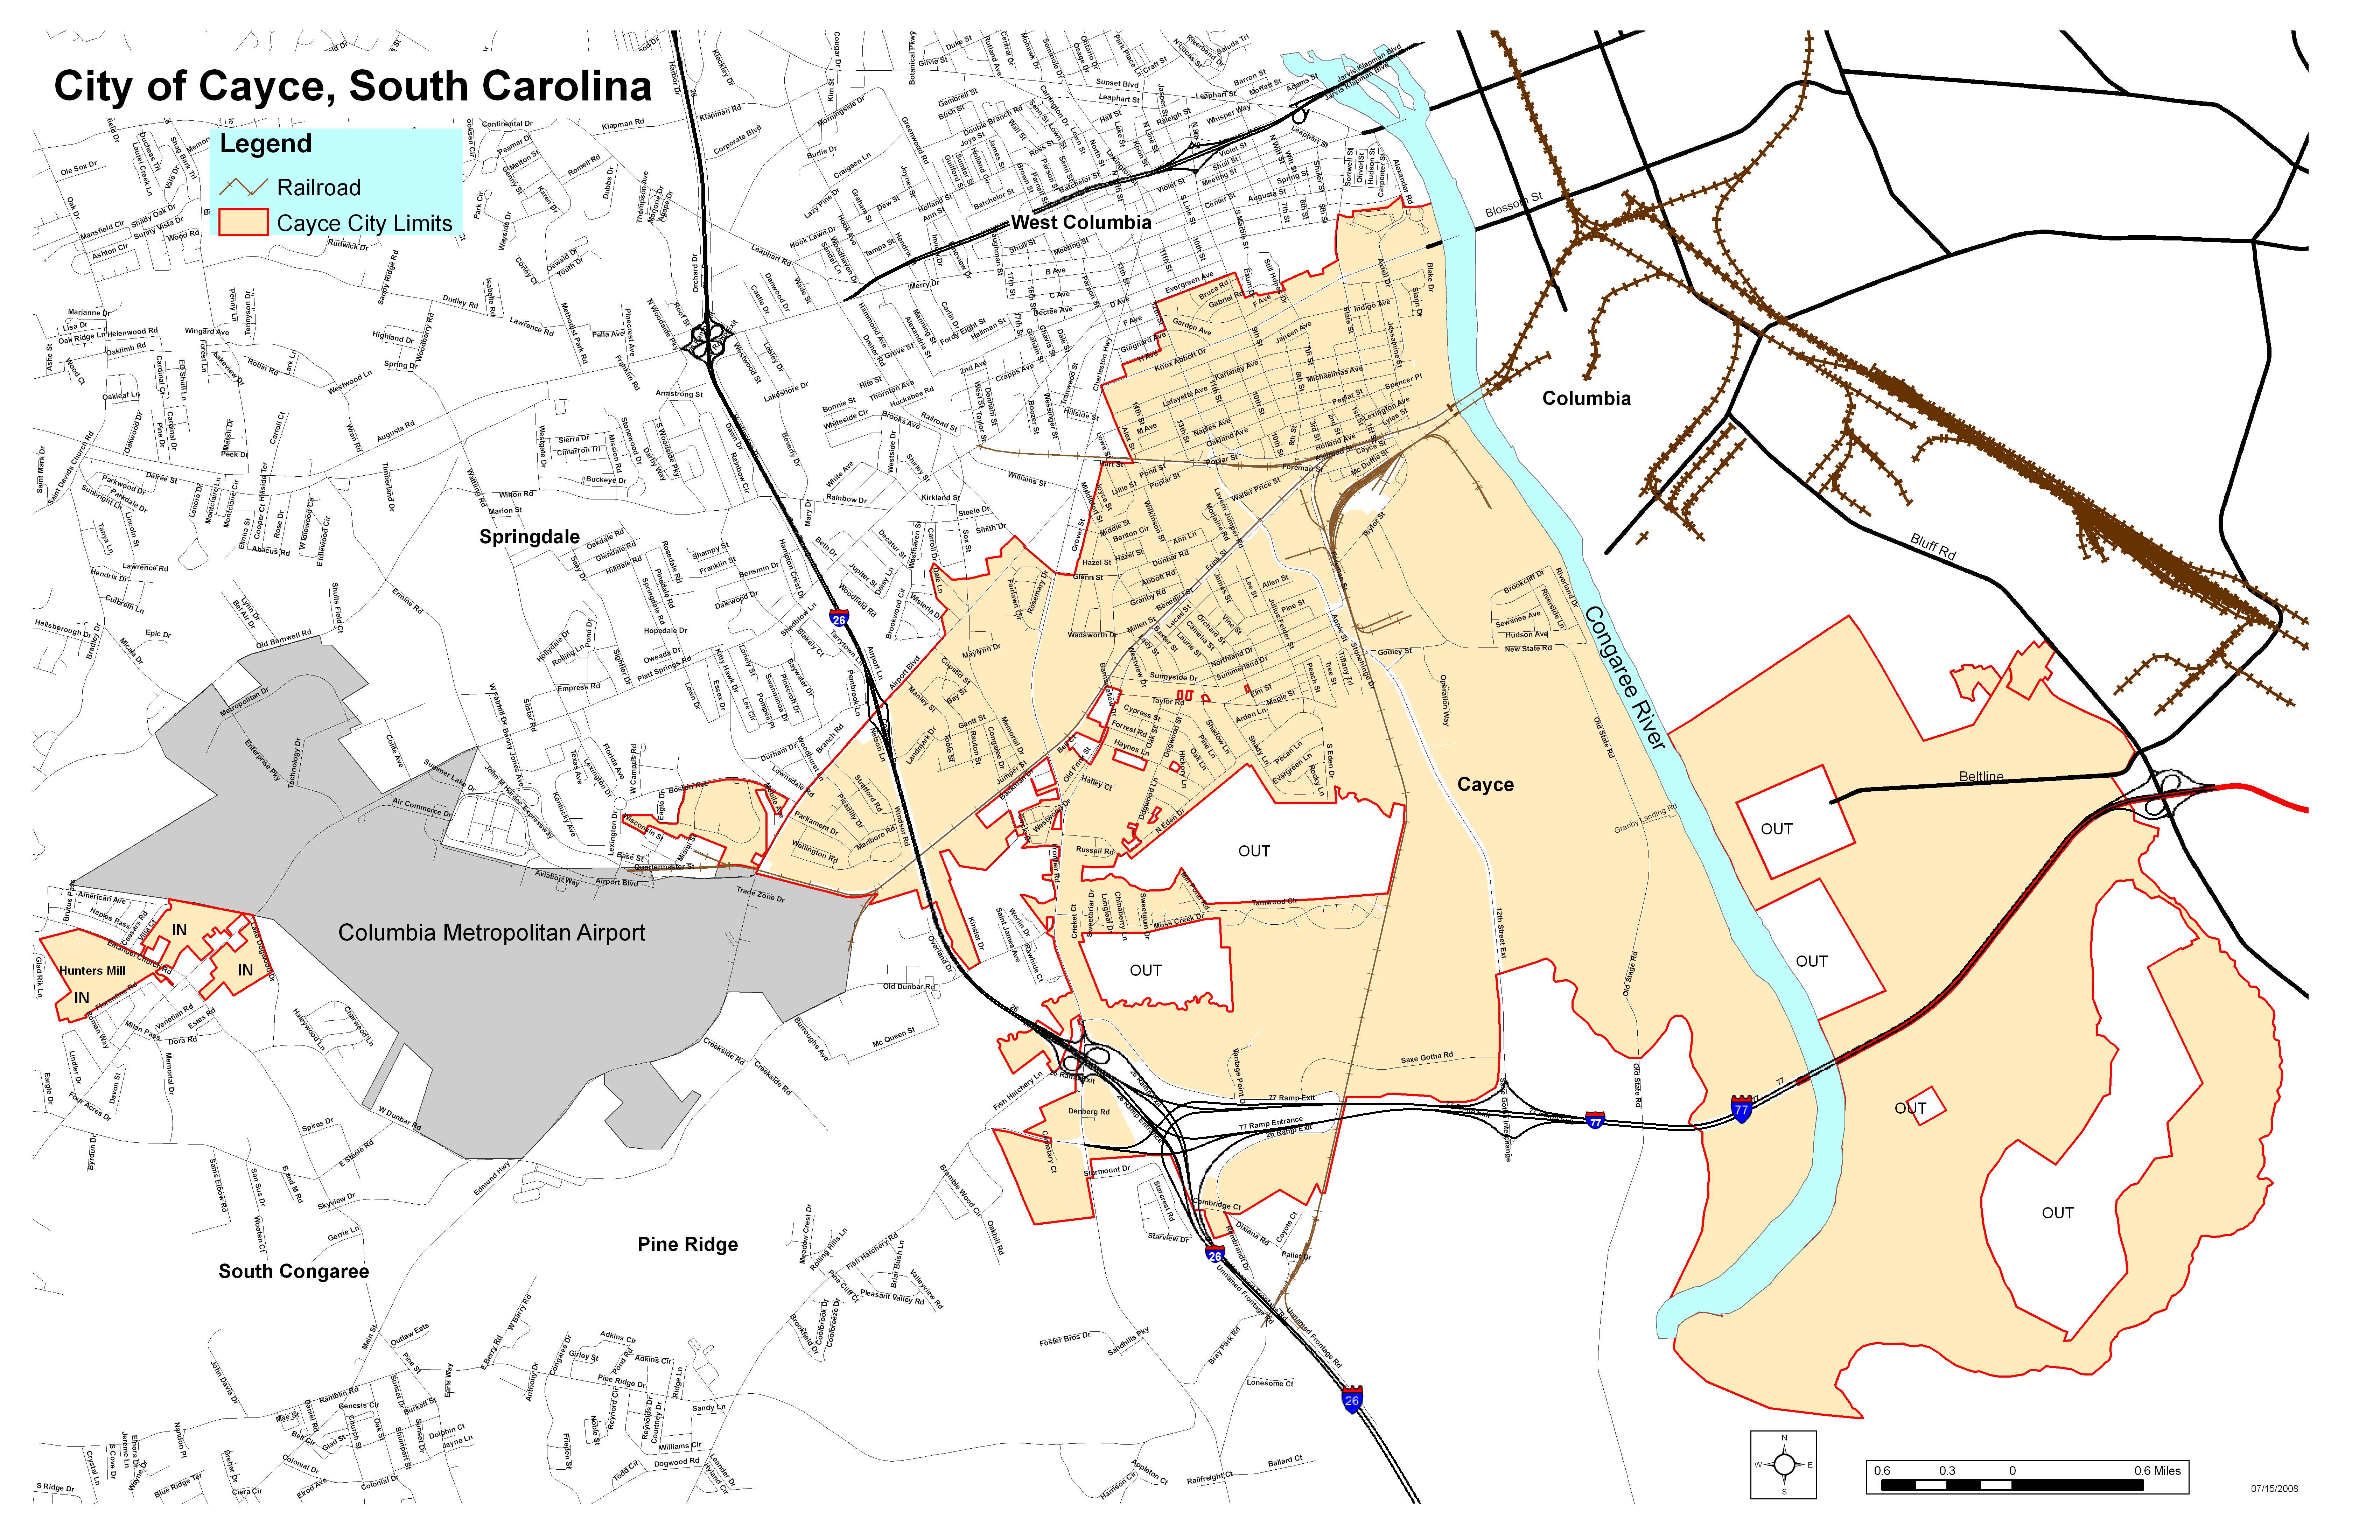 Maps of Lexington County, South Carolina